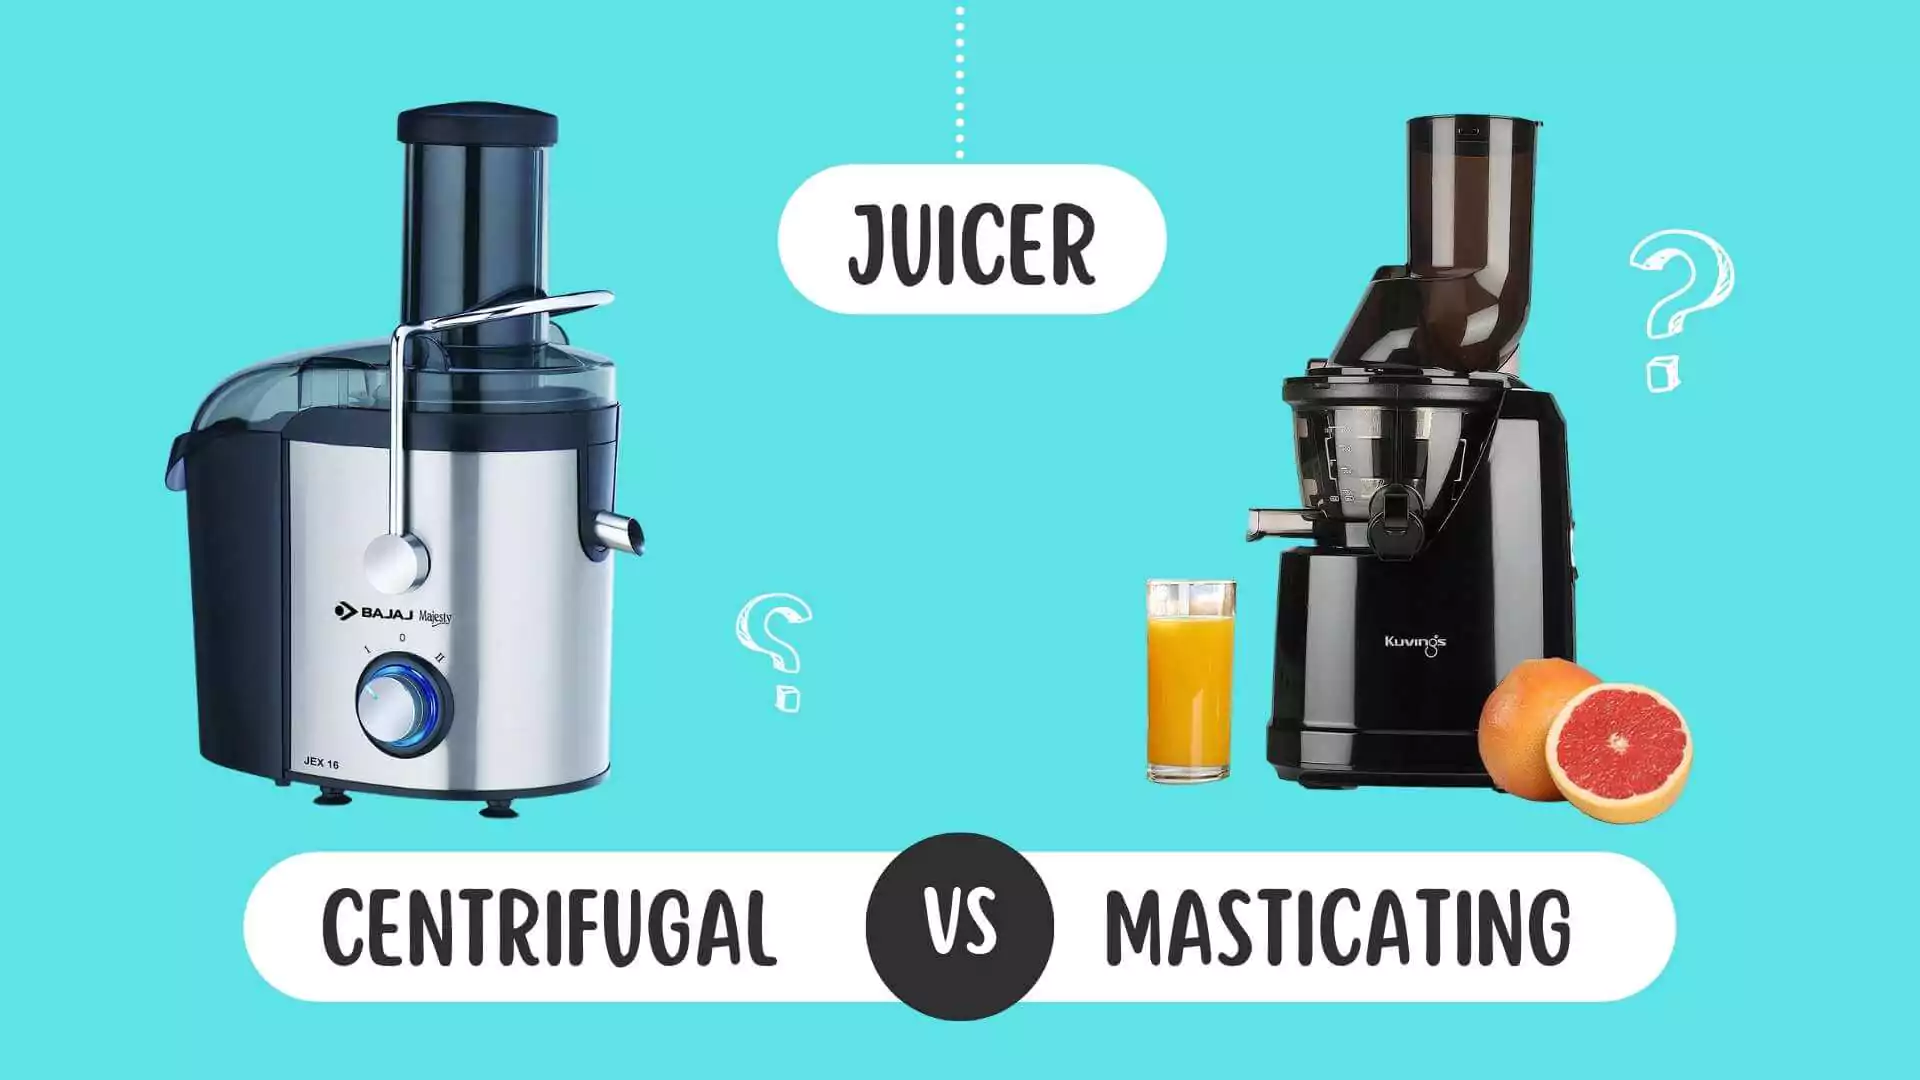 Centrifugal vs Cold Press Juicer (Masticating Juicer)